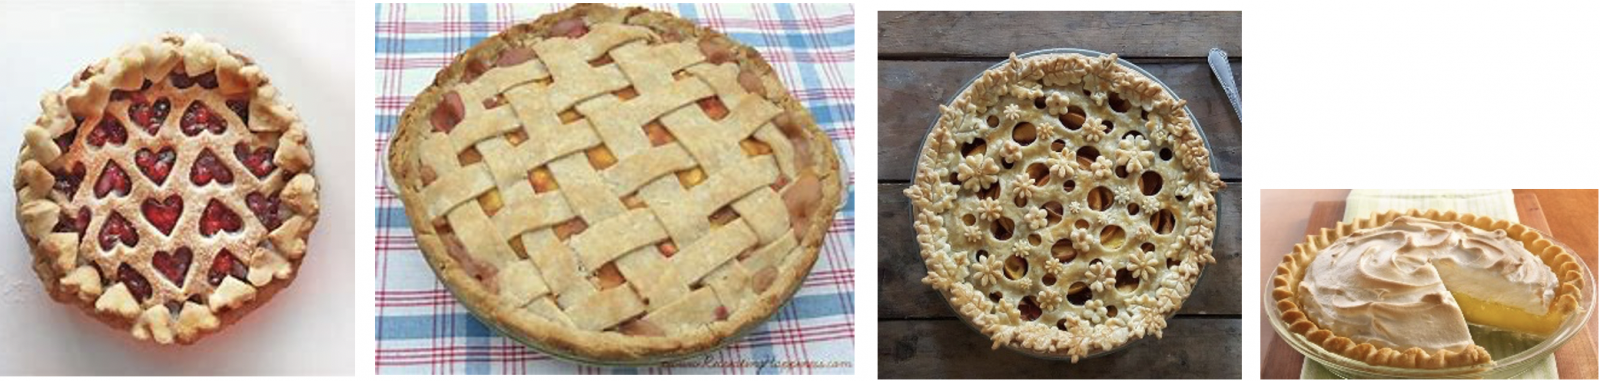 Pie crust examples